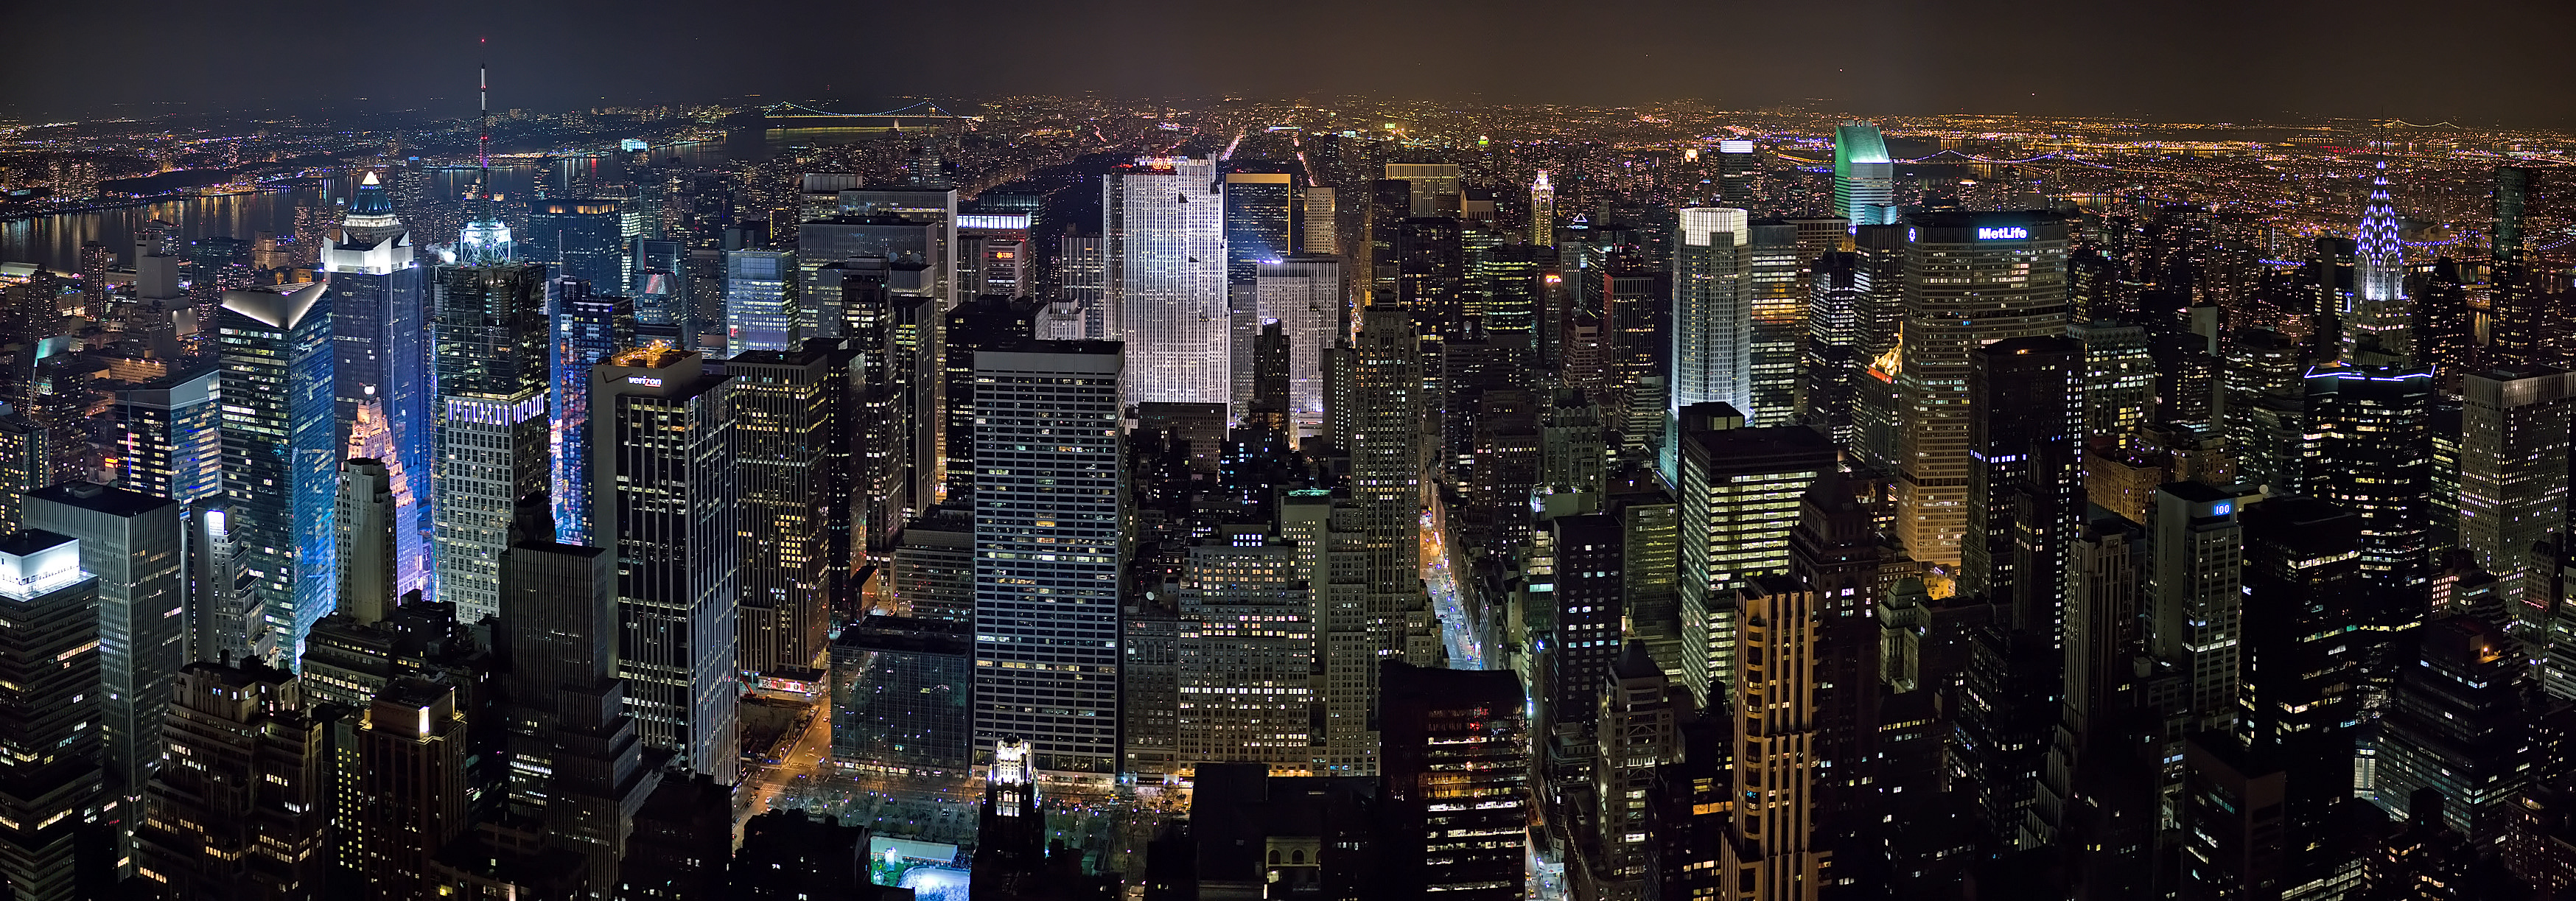 File:New York Midtown Skyline at night - Jan 2006 edit1.jpg ...